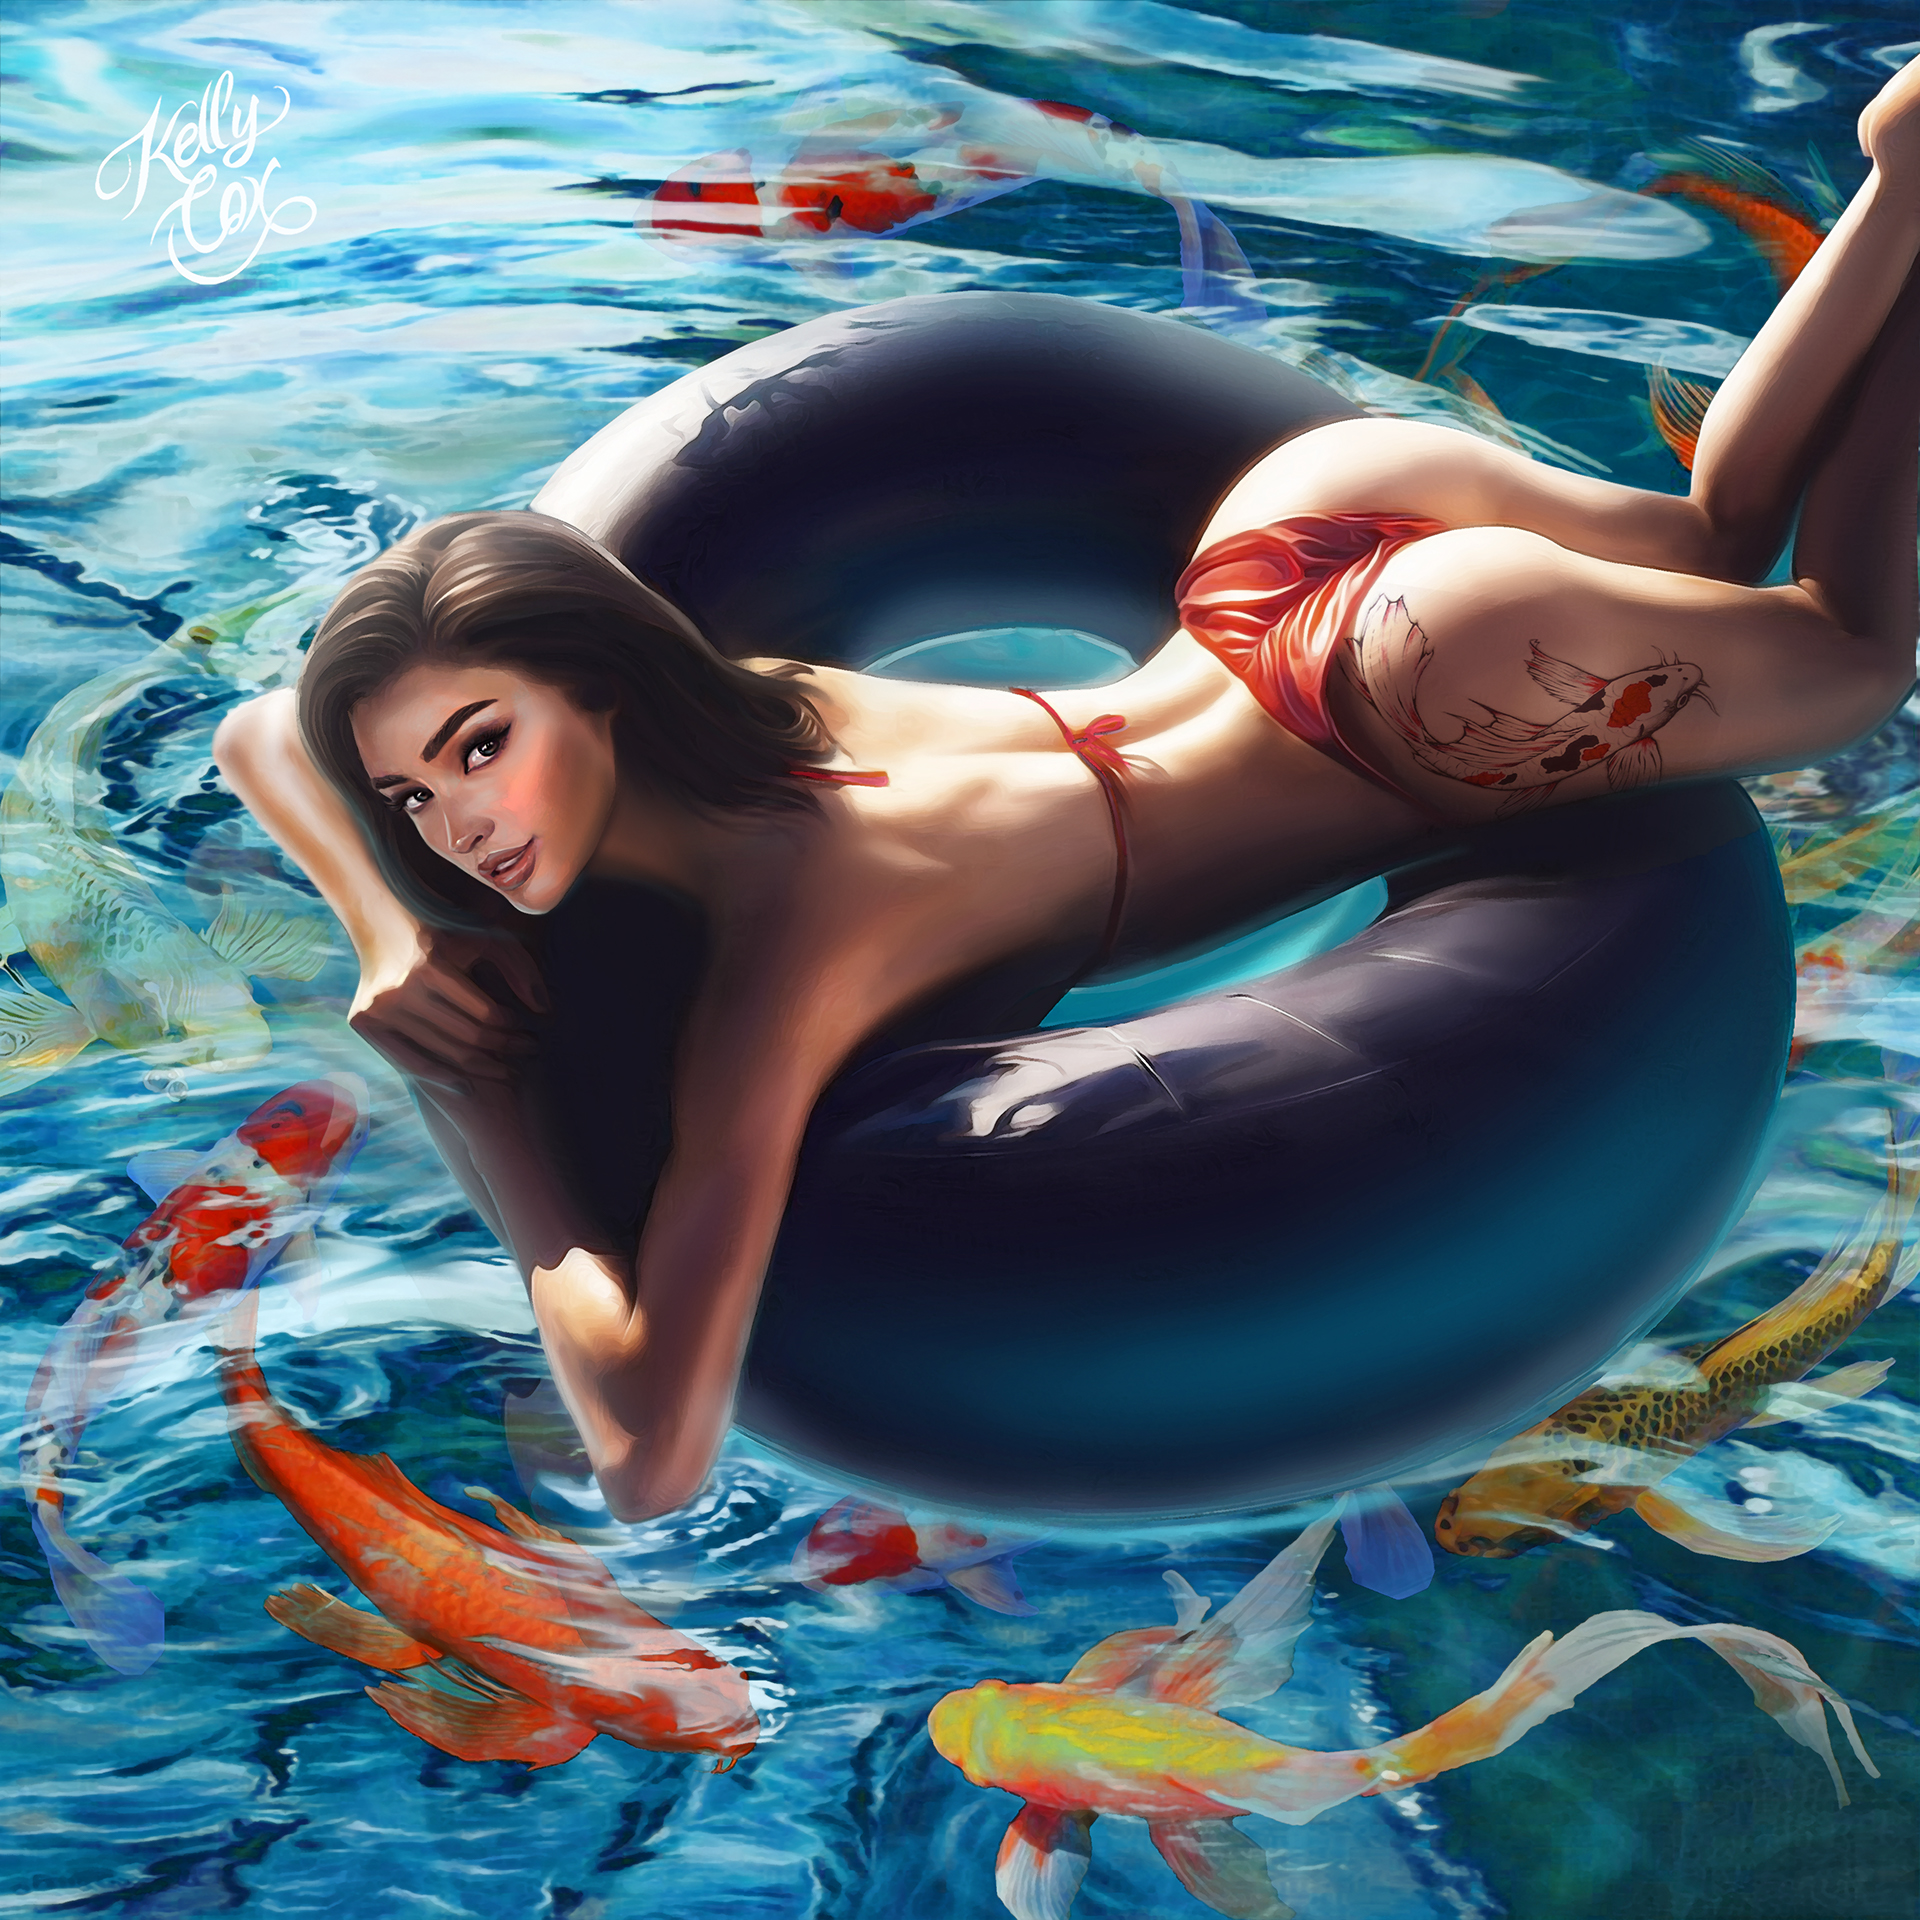 General 1920x1920 women ass Kelly Cox top view bikini water fish long hair digital art artwork red bikini